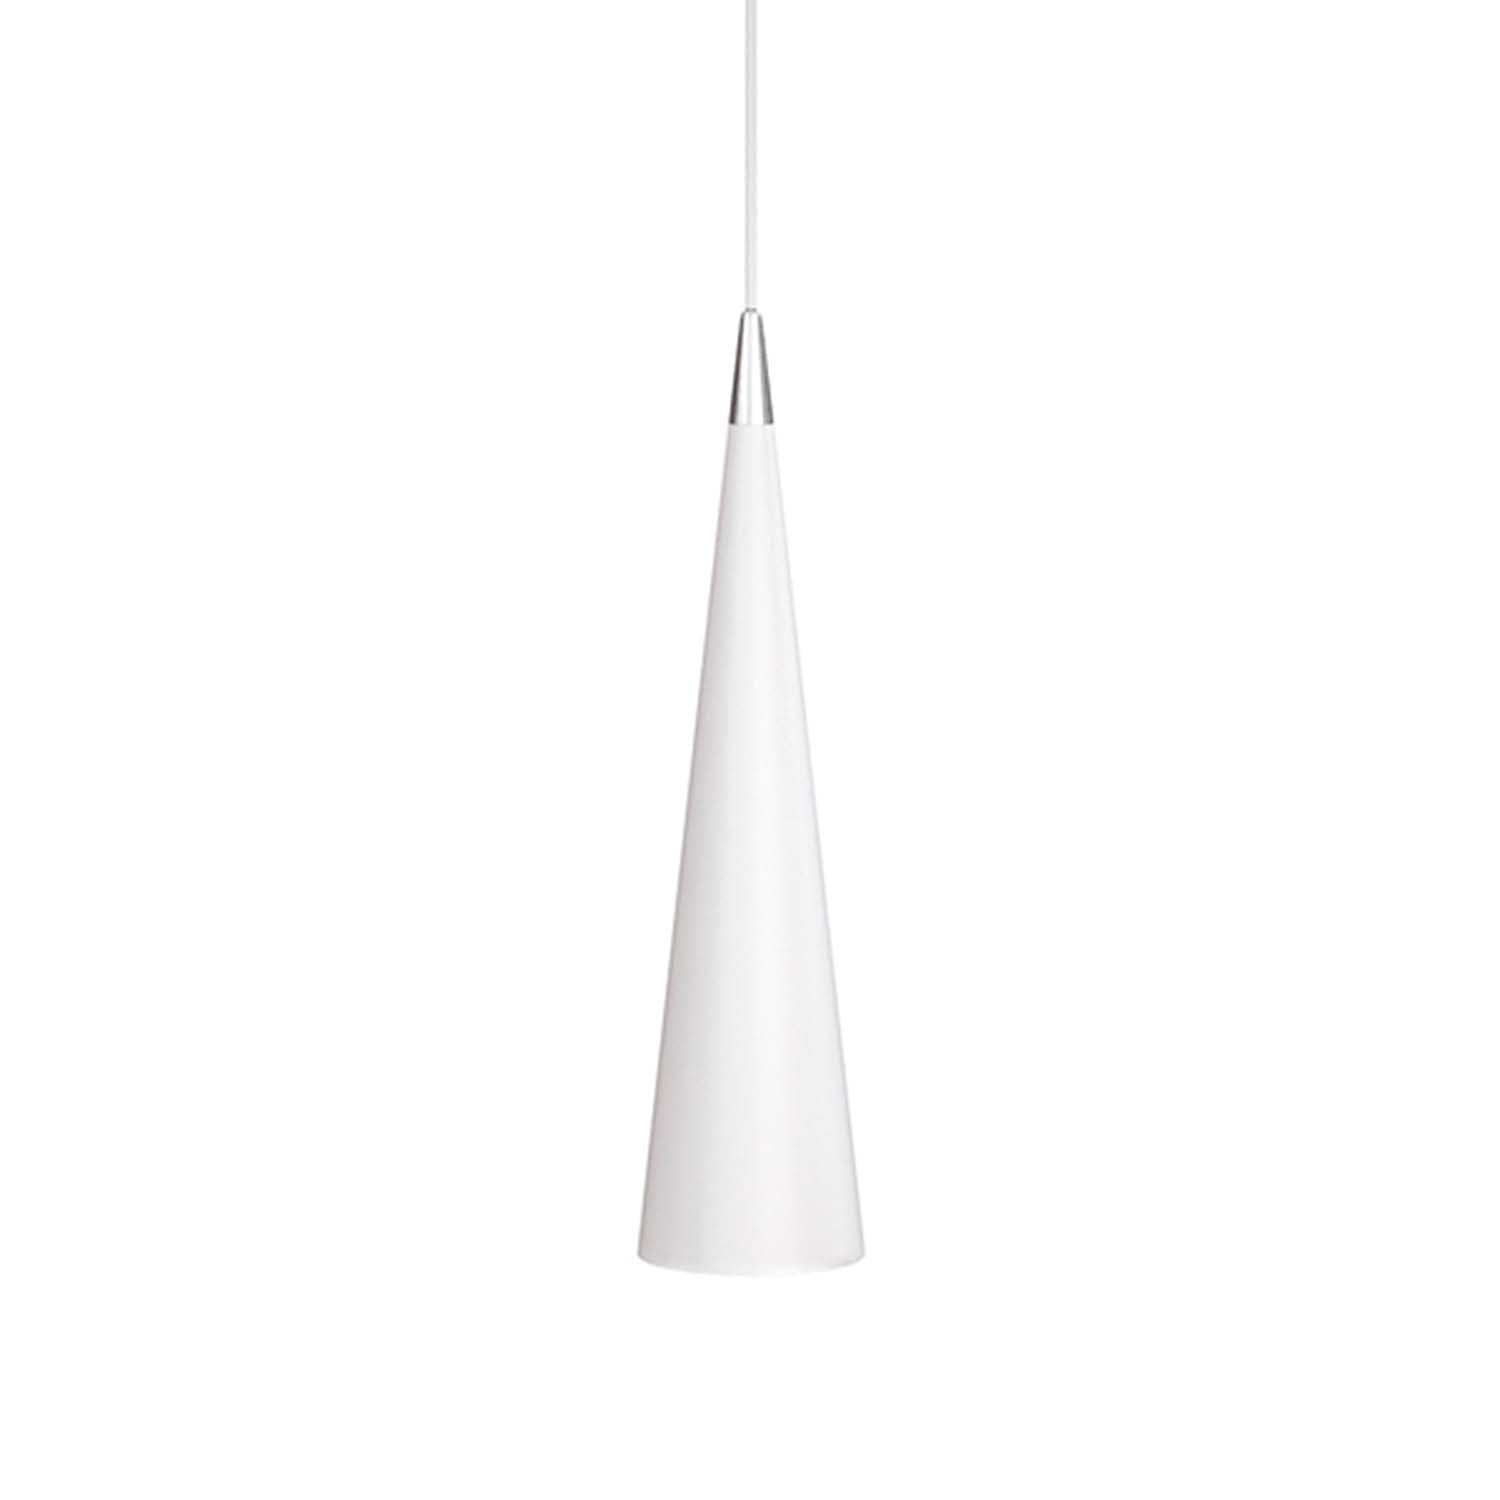 NEVILL - Conical pendant light, design for kitchen island